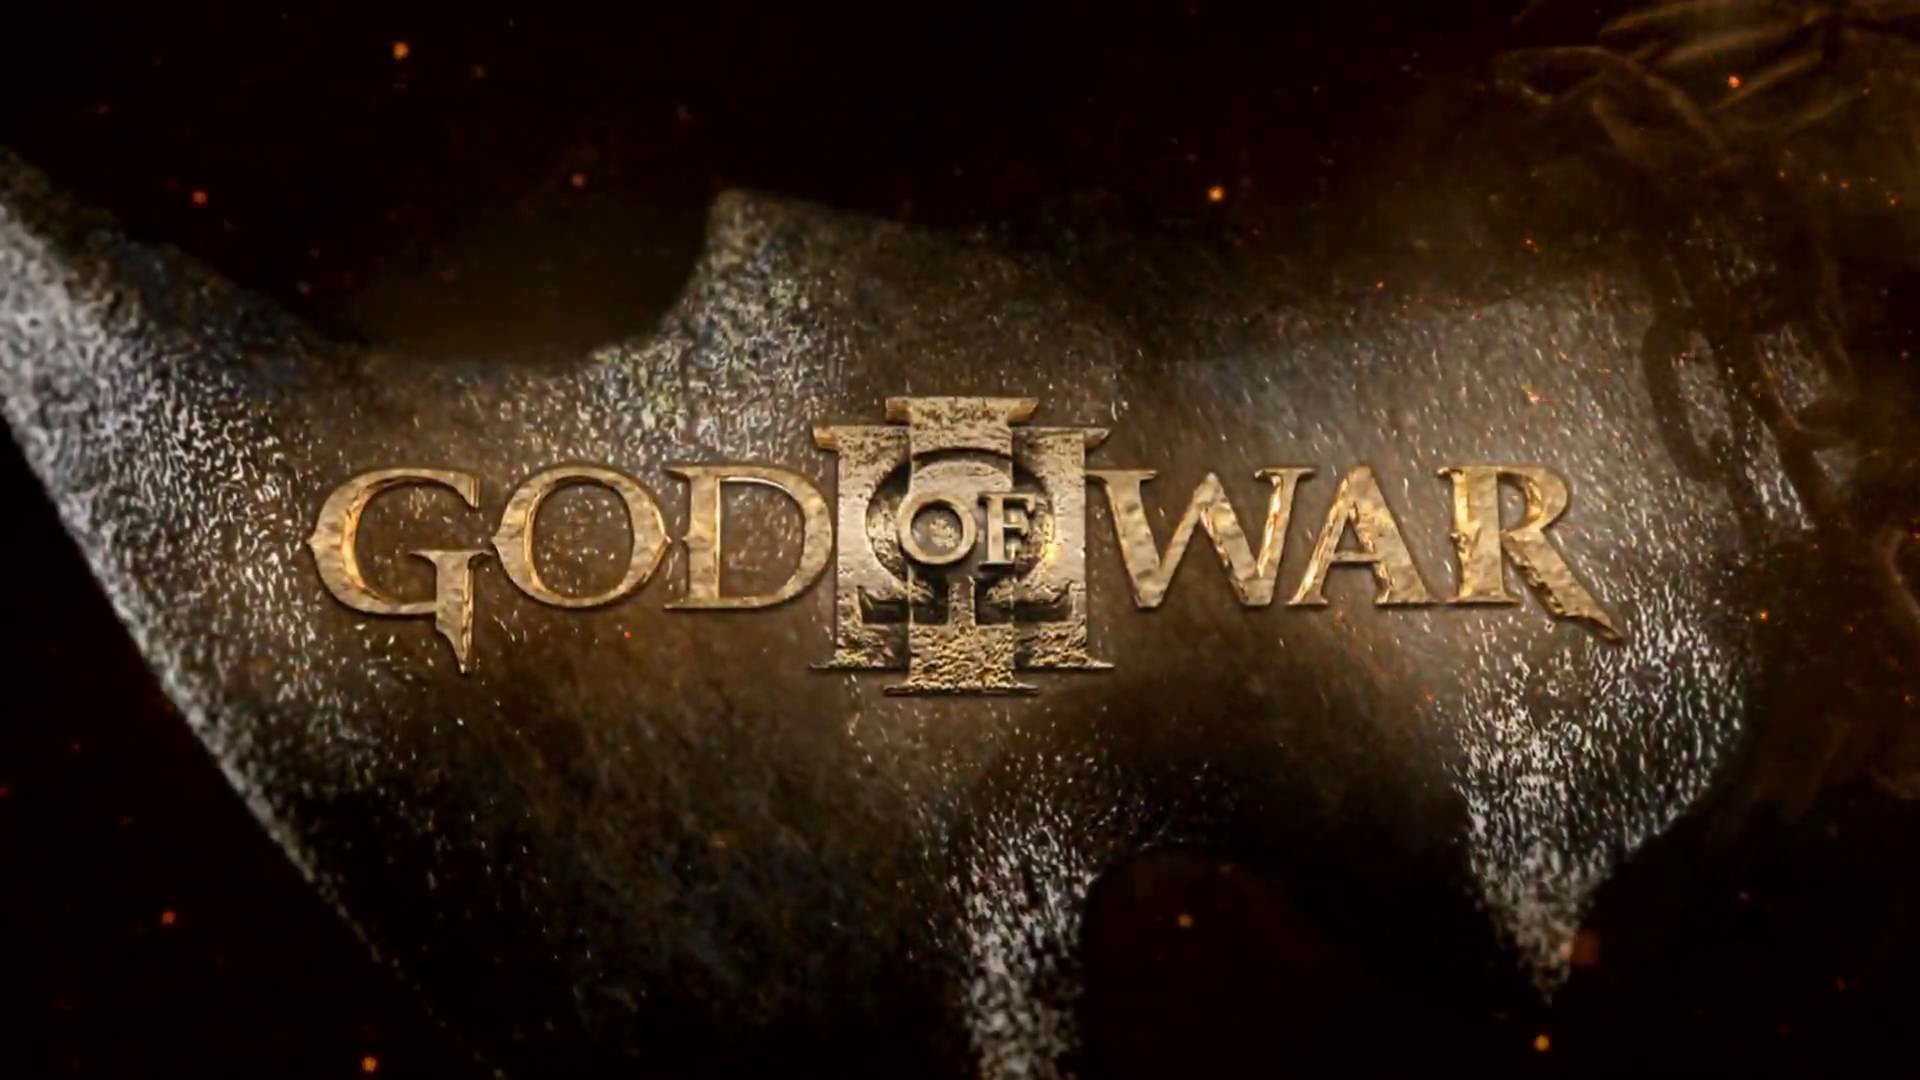 1920x1080 God of War III 'Chaos Will Rise Trailer' [1080p] TRUE-HD QUALITY - YouTube